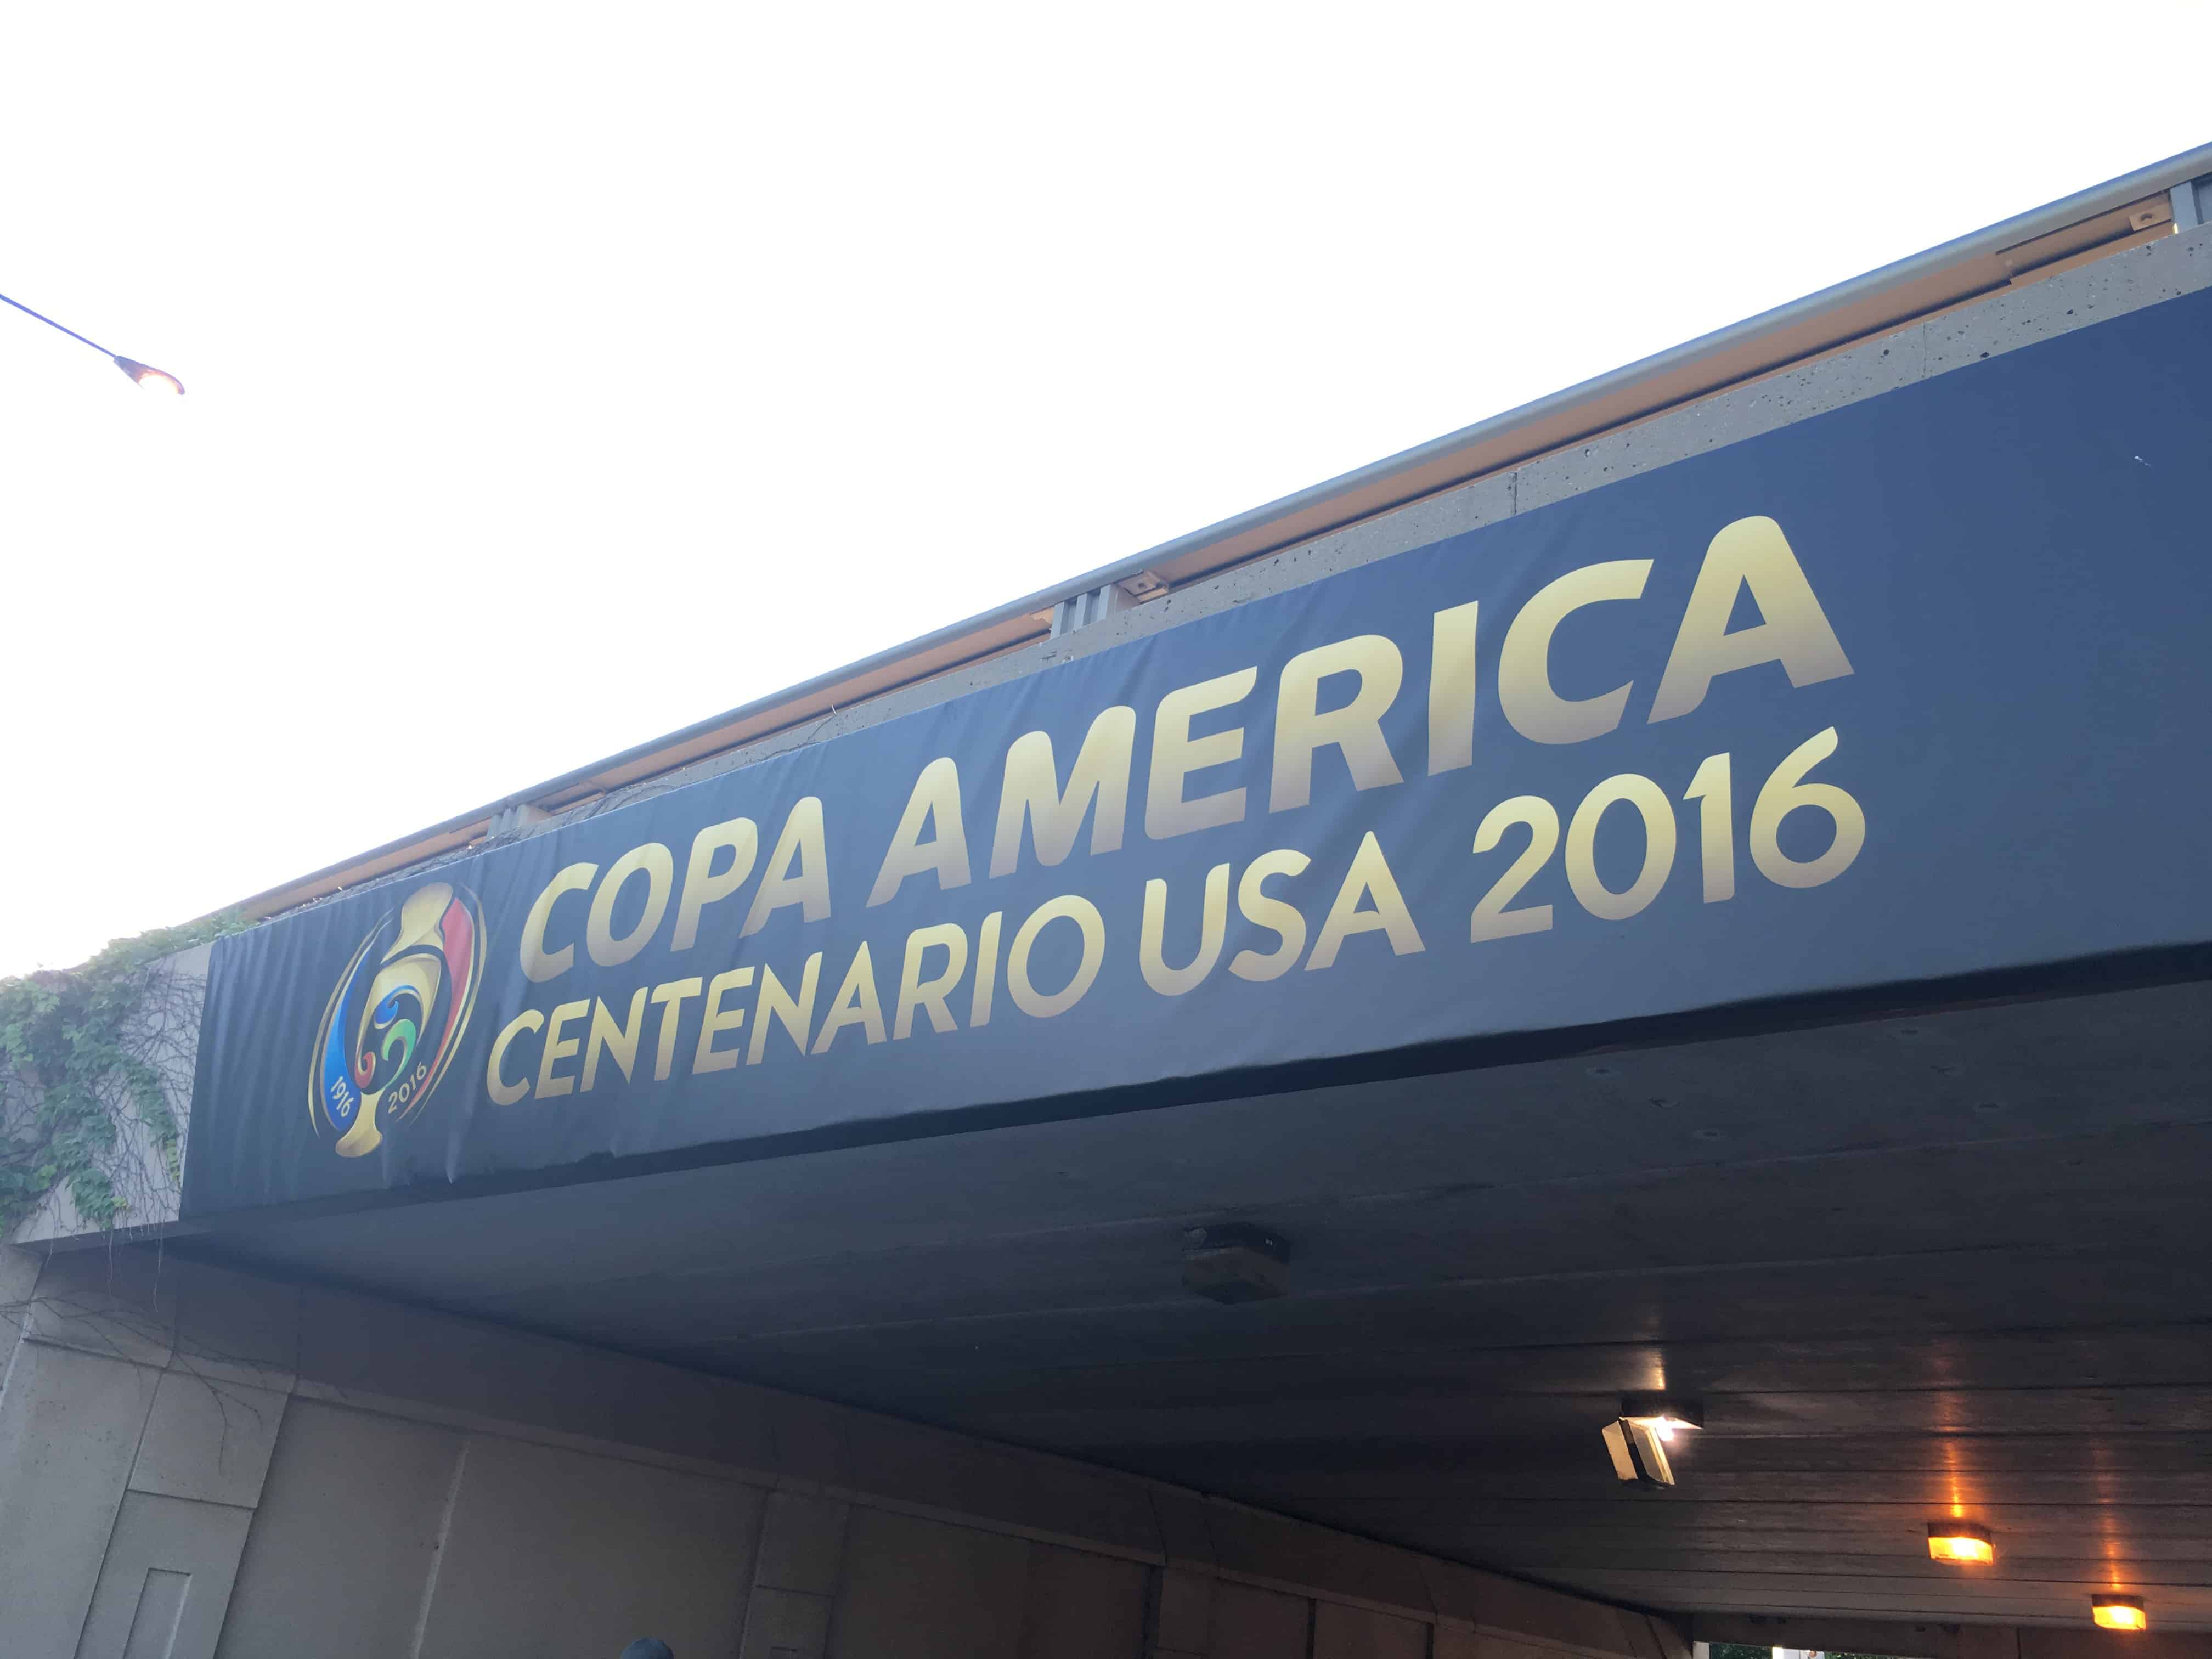 Copa América Centenario USA 2016 at Soldier Field in Chicago, Illinois